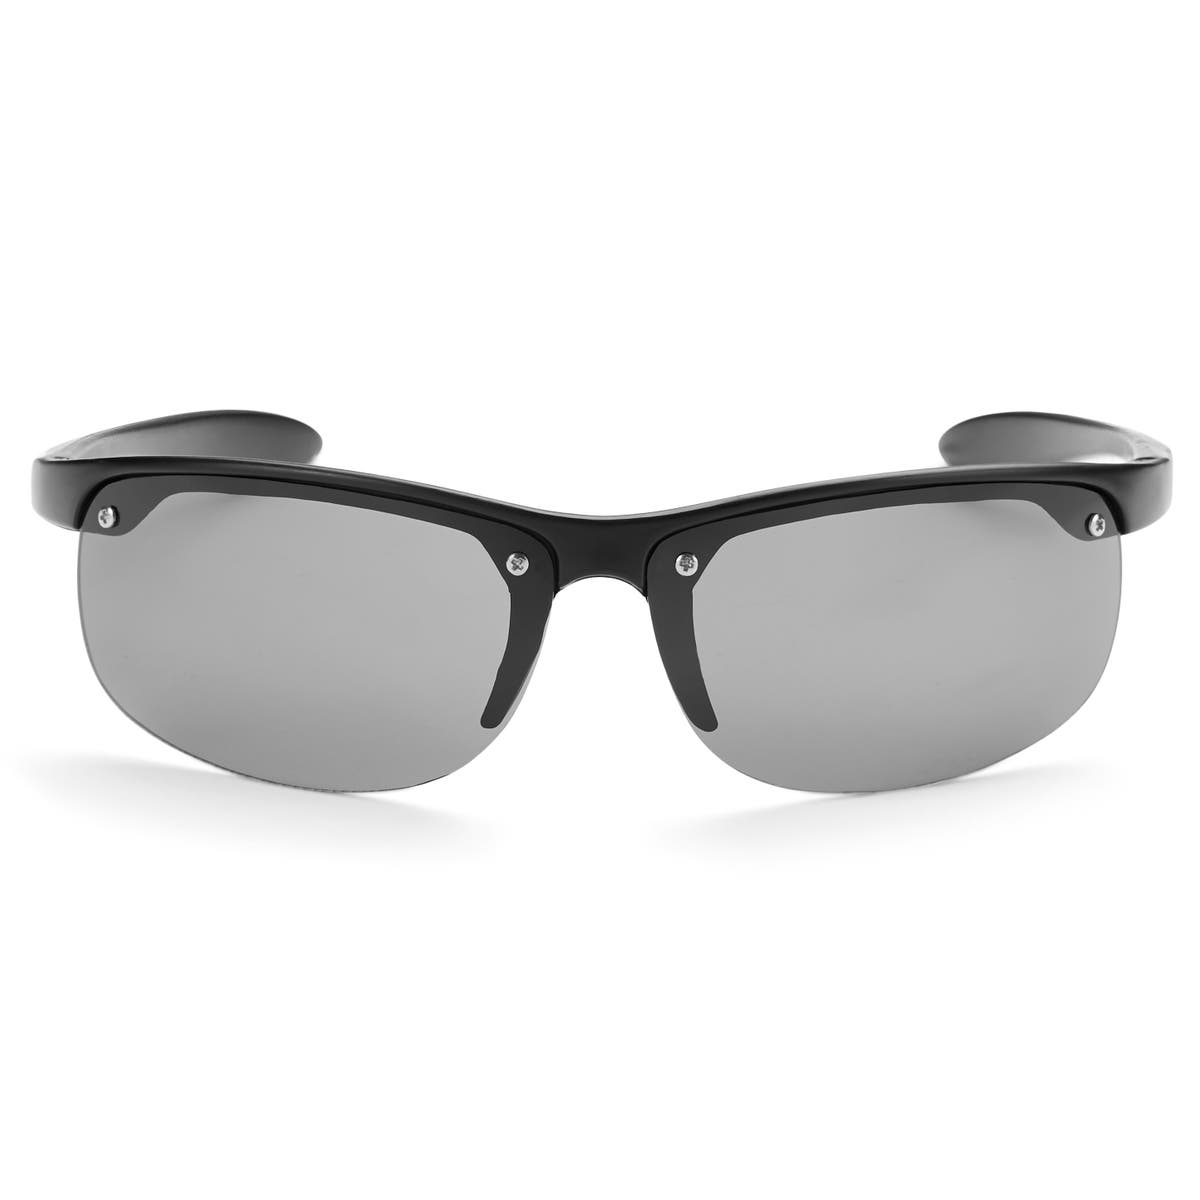 Tortoise Shell & Brown Wraparound Sports Sunglasses - for Men - EverShade